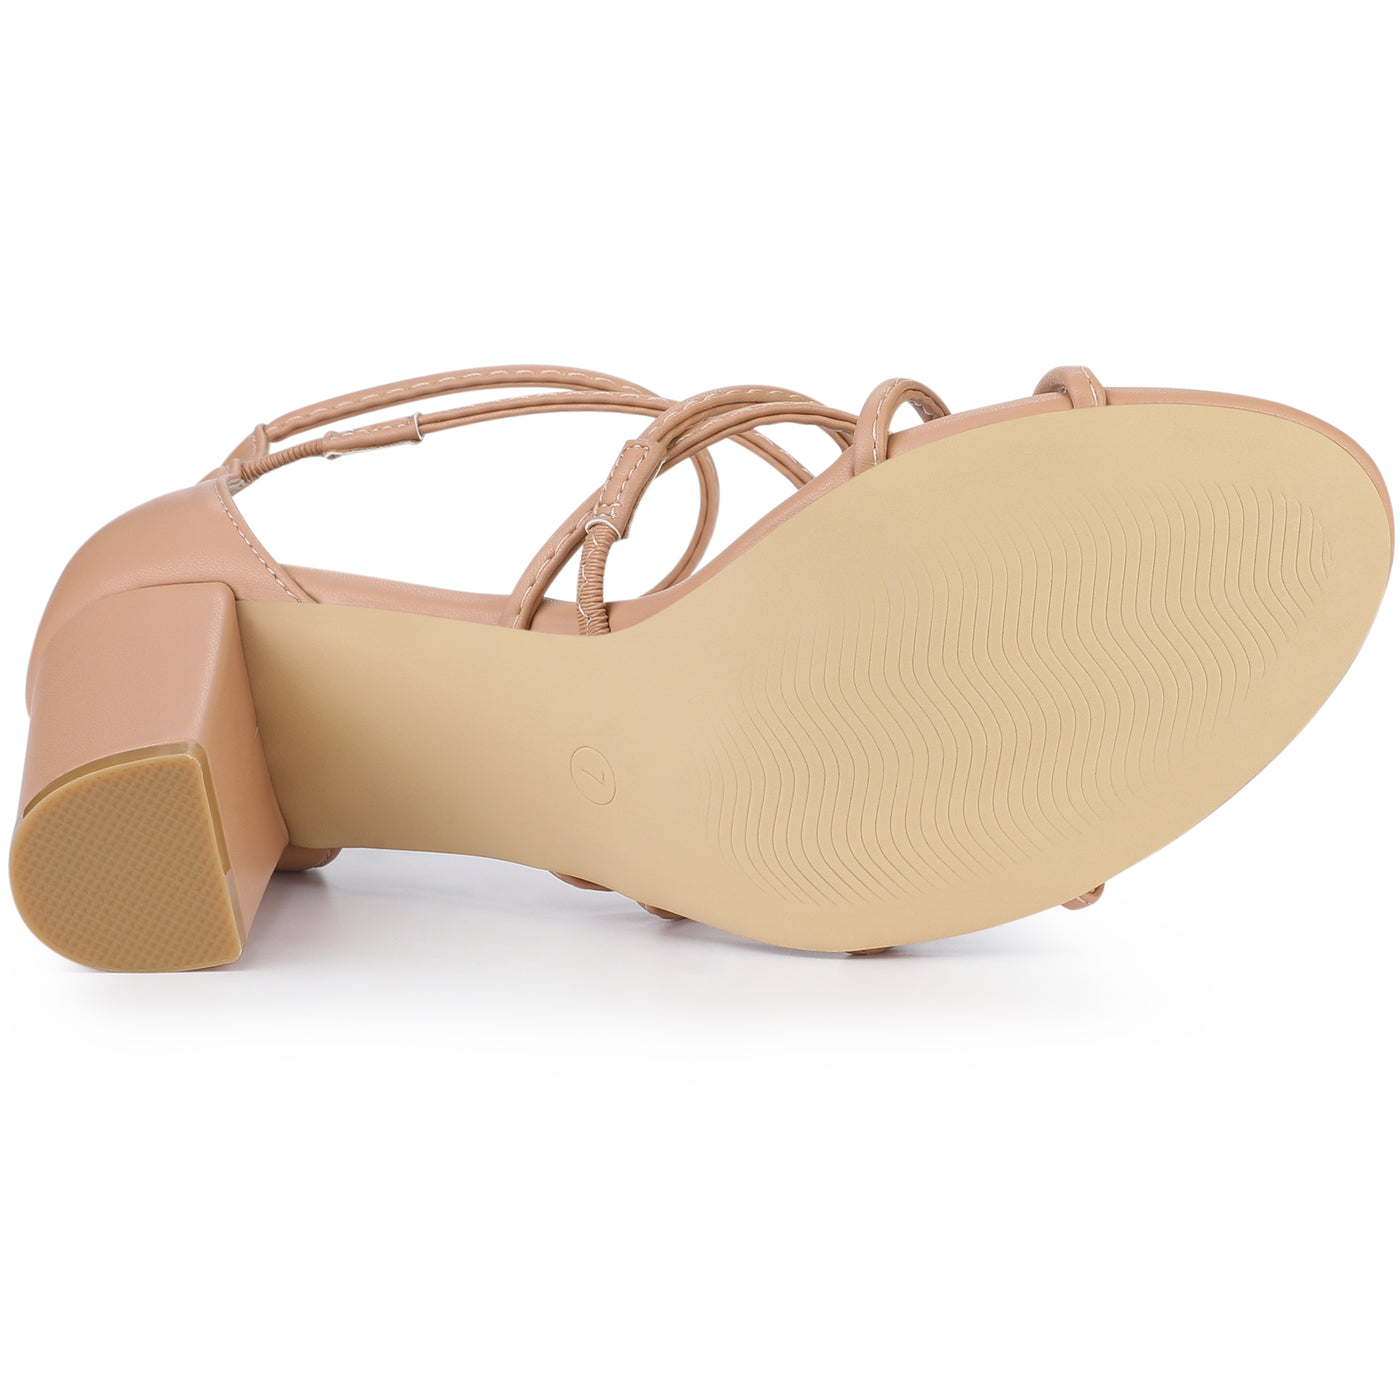 Bublédon Perphy Women's Crisscross Strappy Strap Chunky Heels Sandals